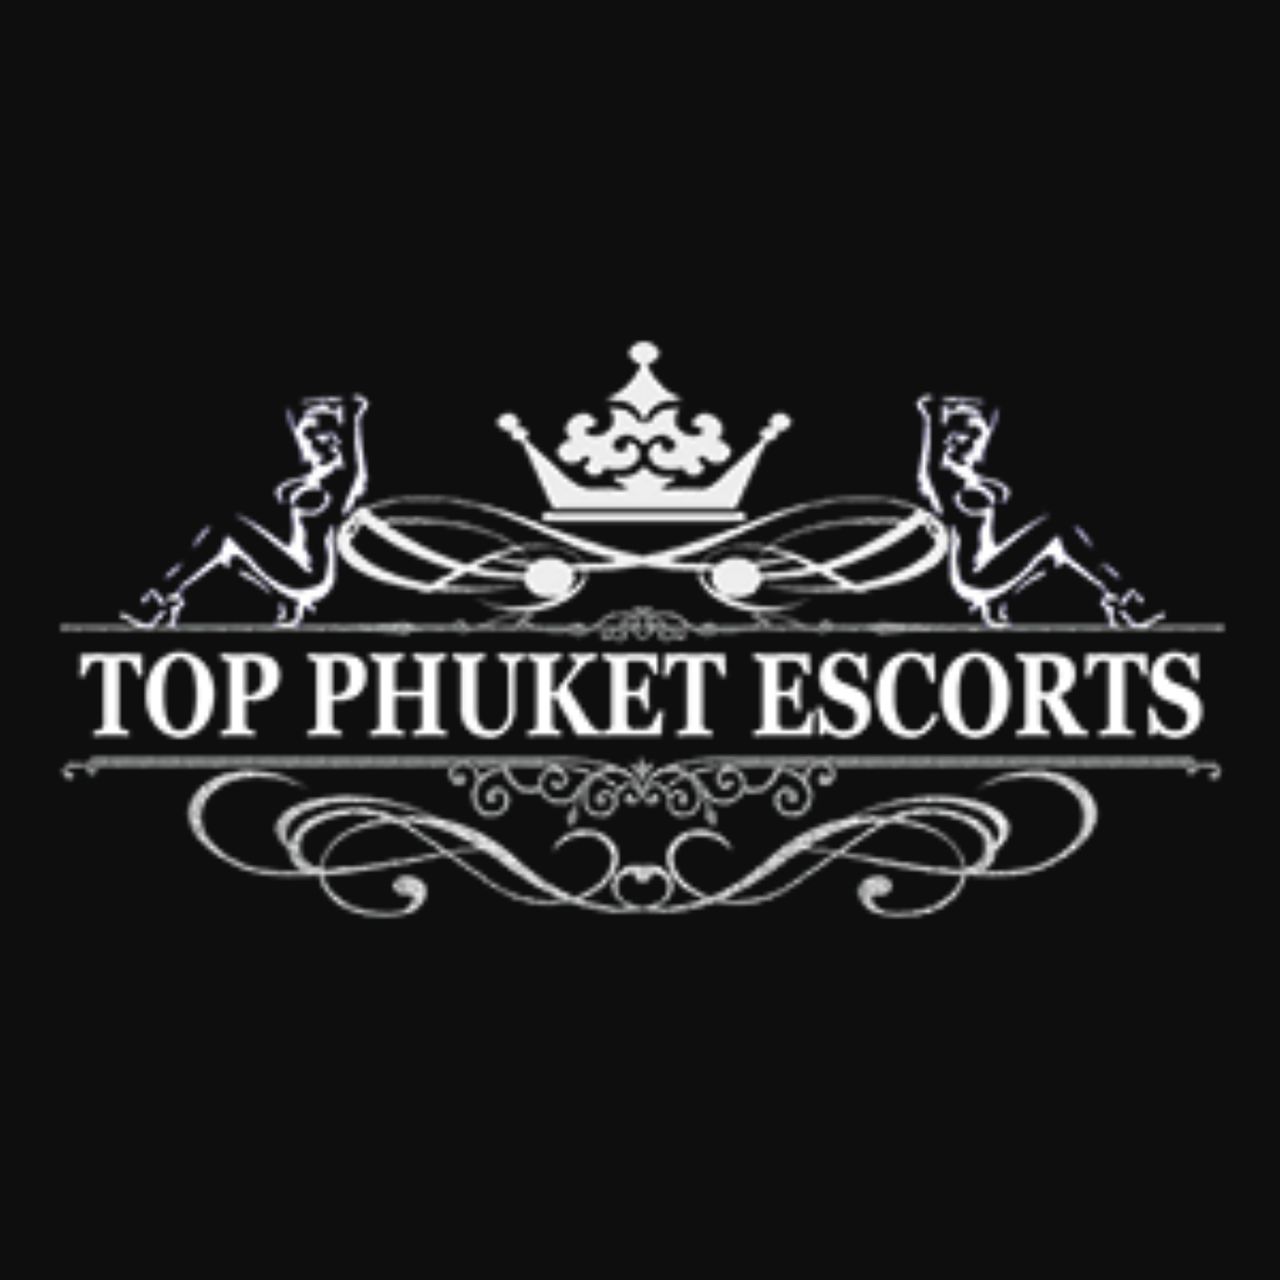 Top Phuket Escorts